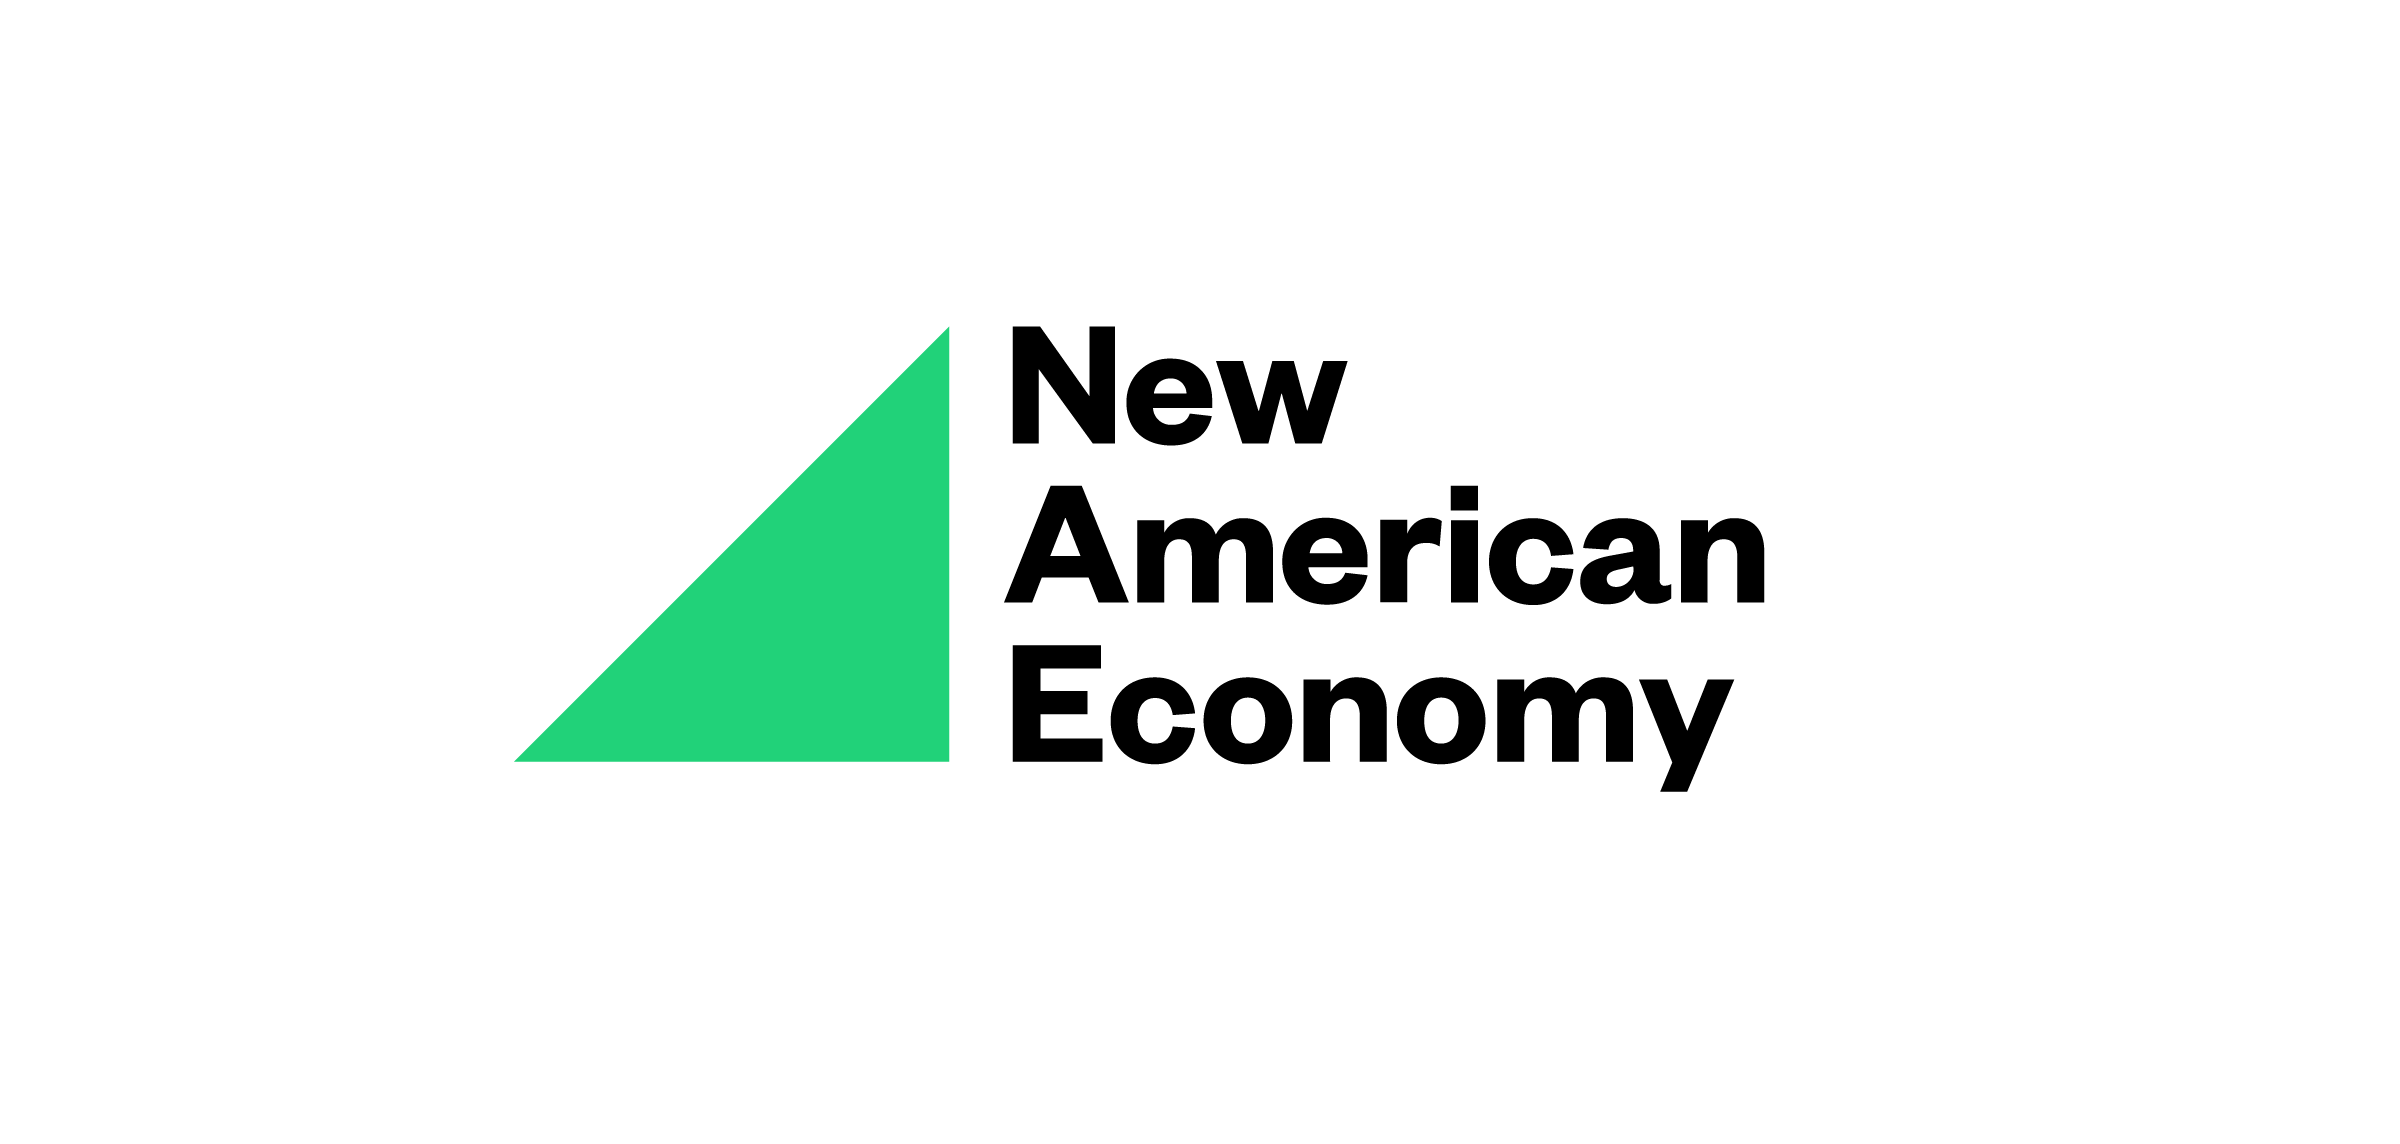 research.newamericaneconomy.org